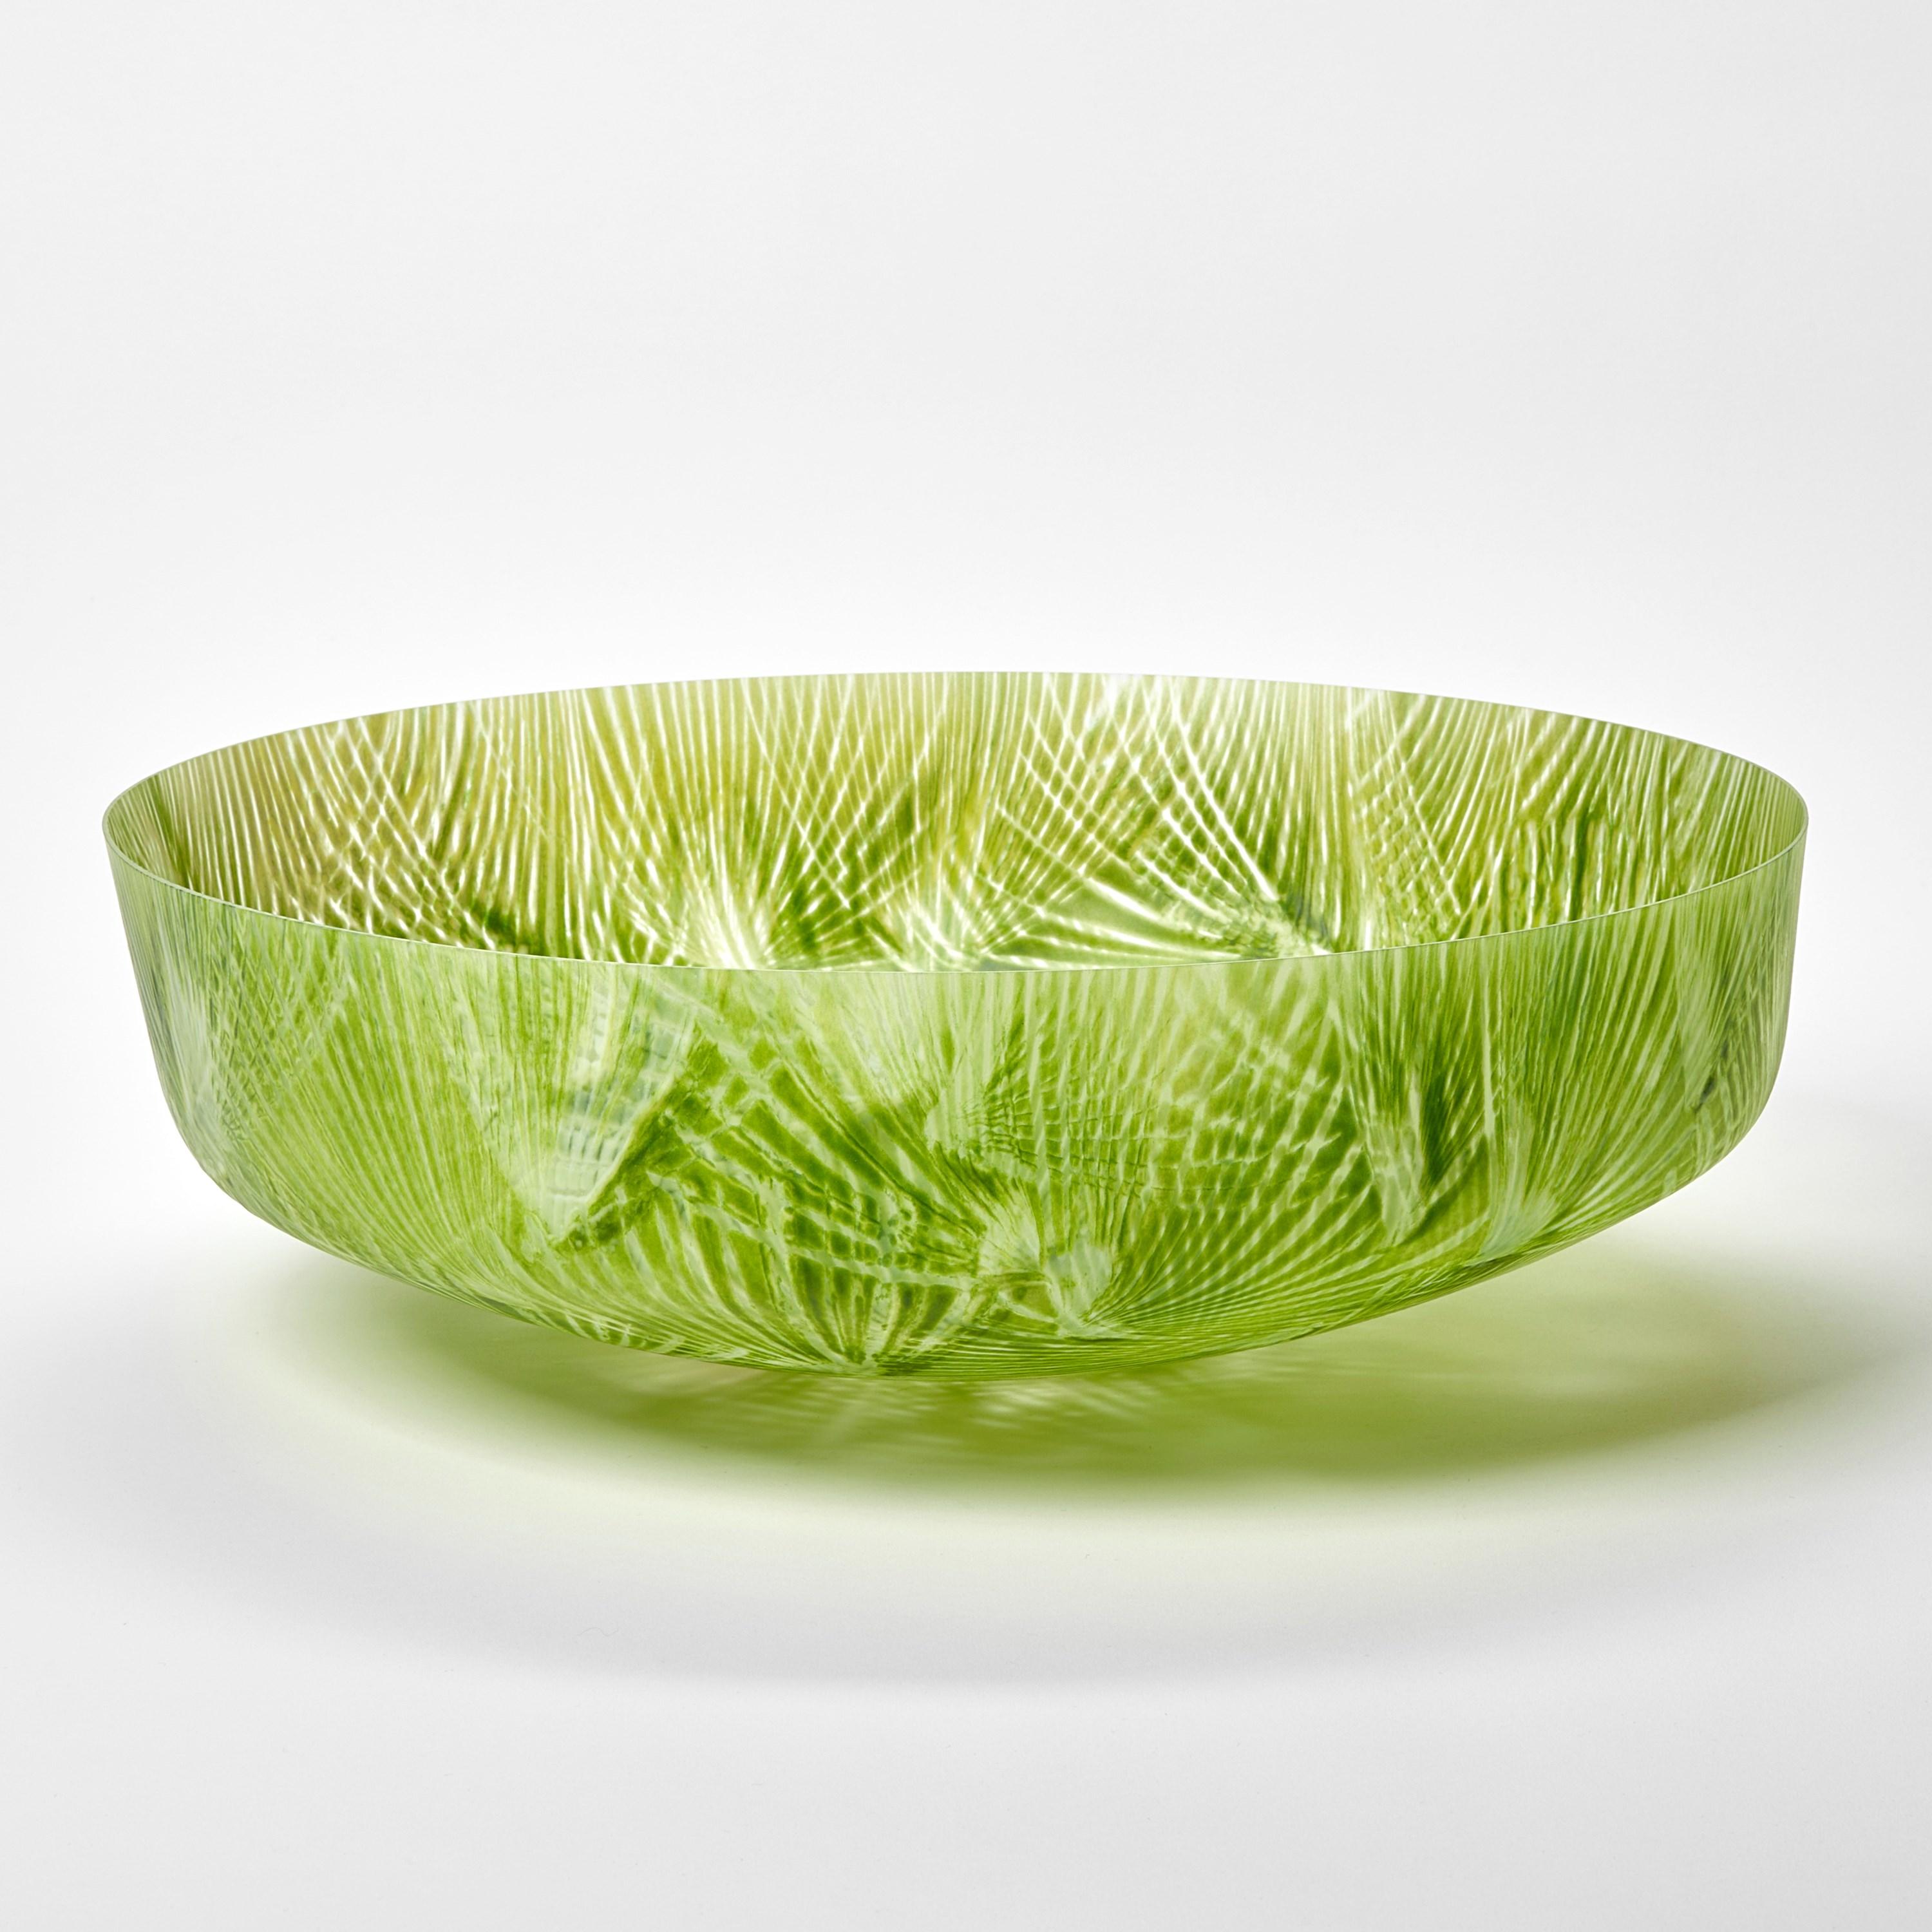 Organic Modern Taubate, a vibrant green textured glass centrepiece by Amanda Simmons